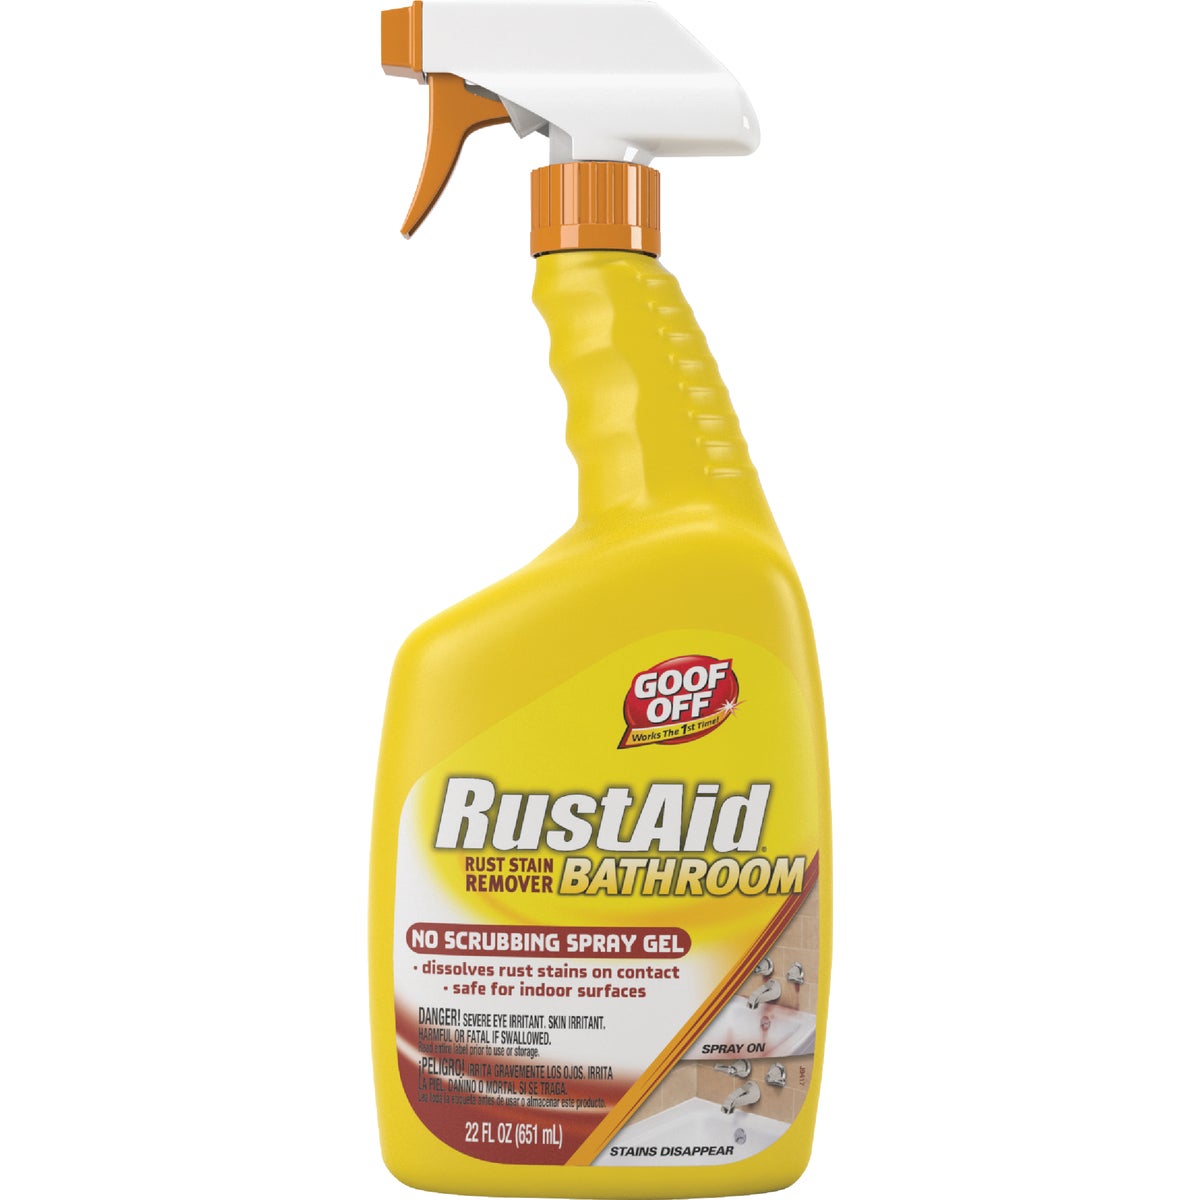 Item 602107, Goof Off RustAid bathroom rust stain remover. No scrubbing spray gel.